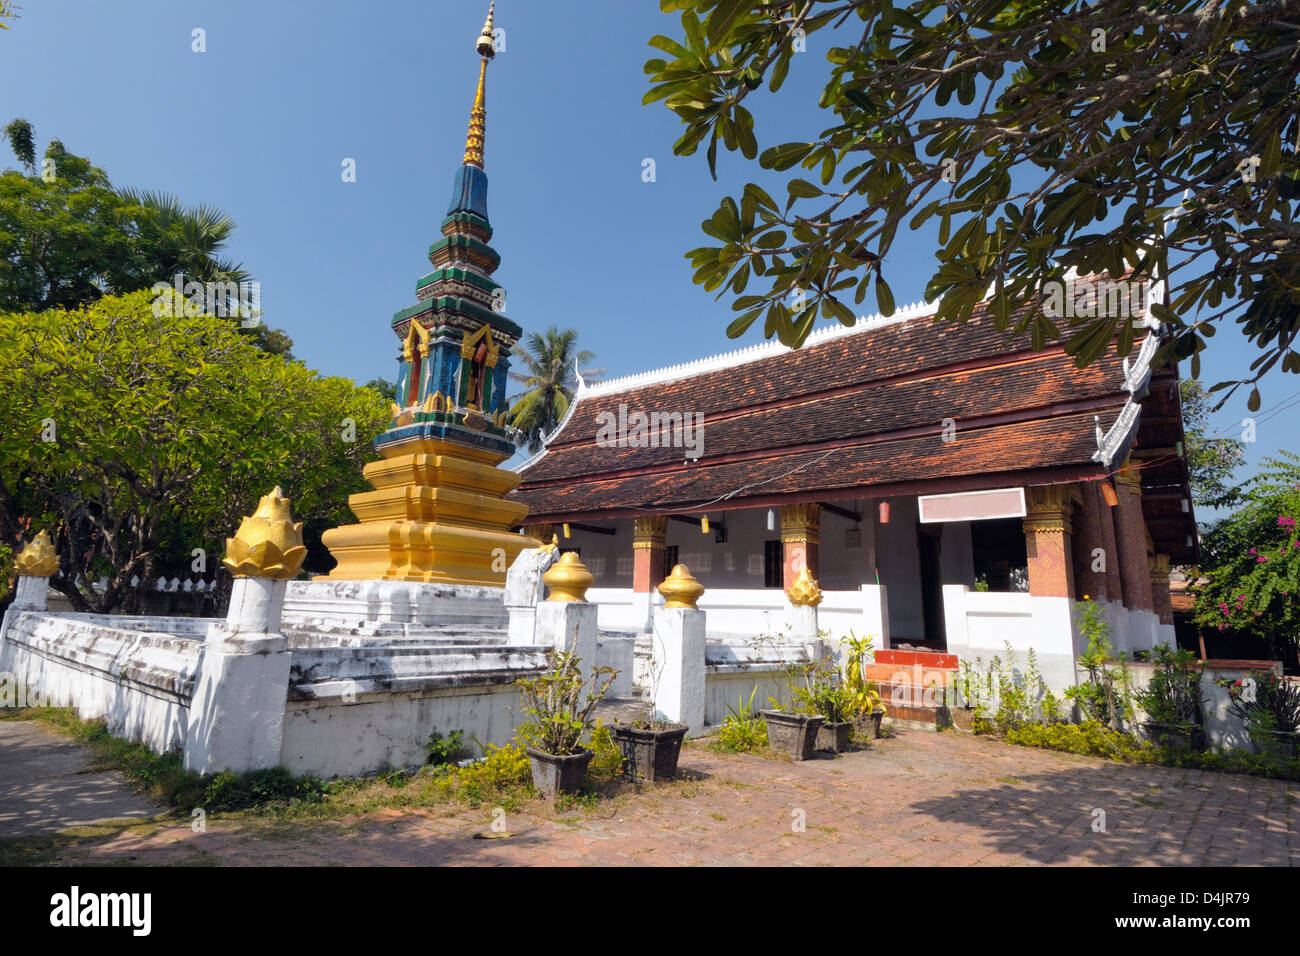 Laos-Tempel und schönen blauen Himmel in Luang Prabang, Laos. Stockfoto